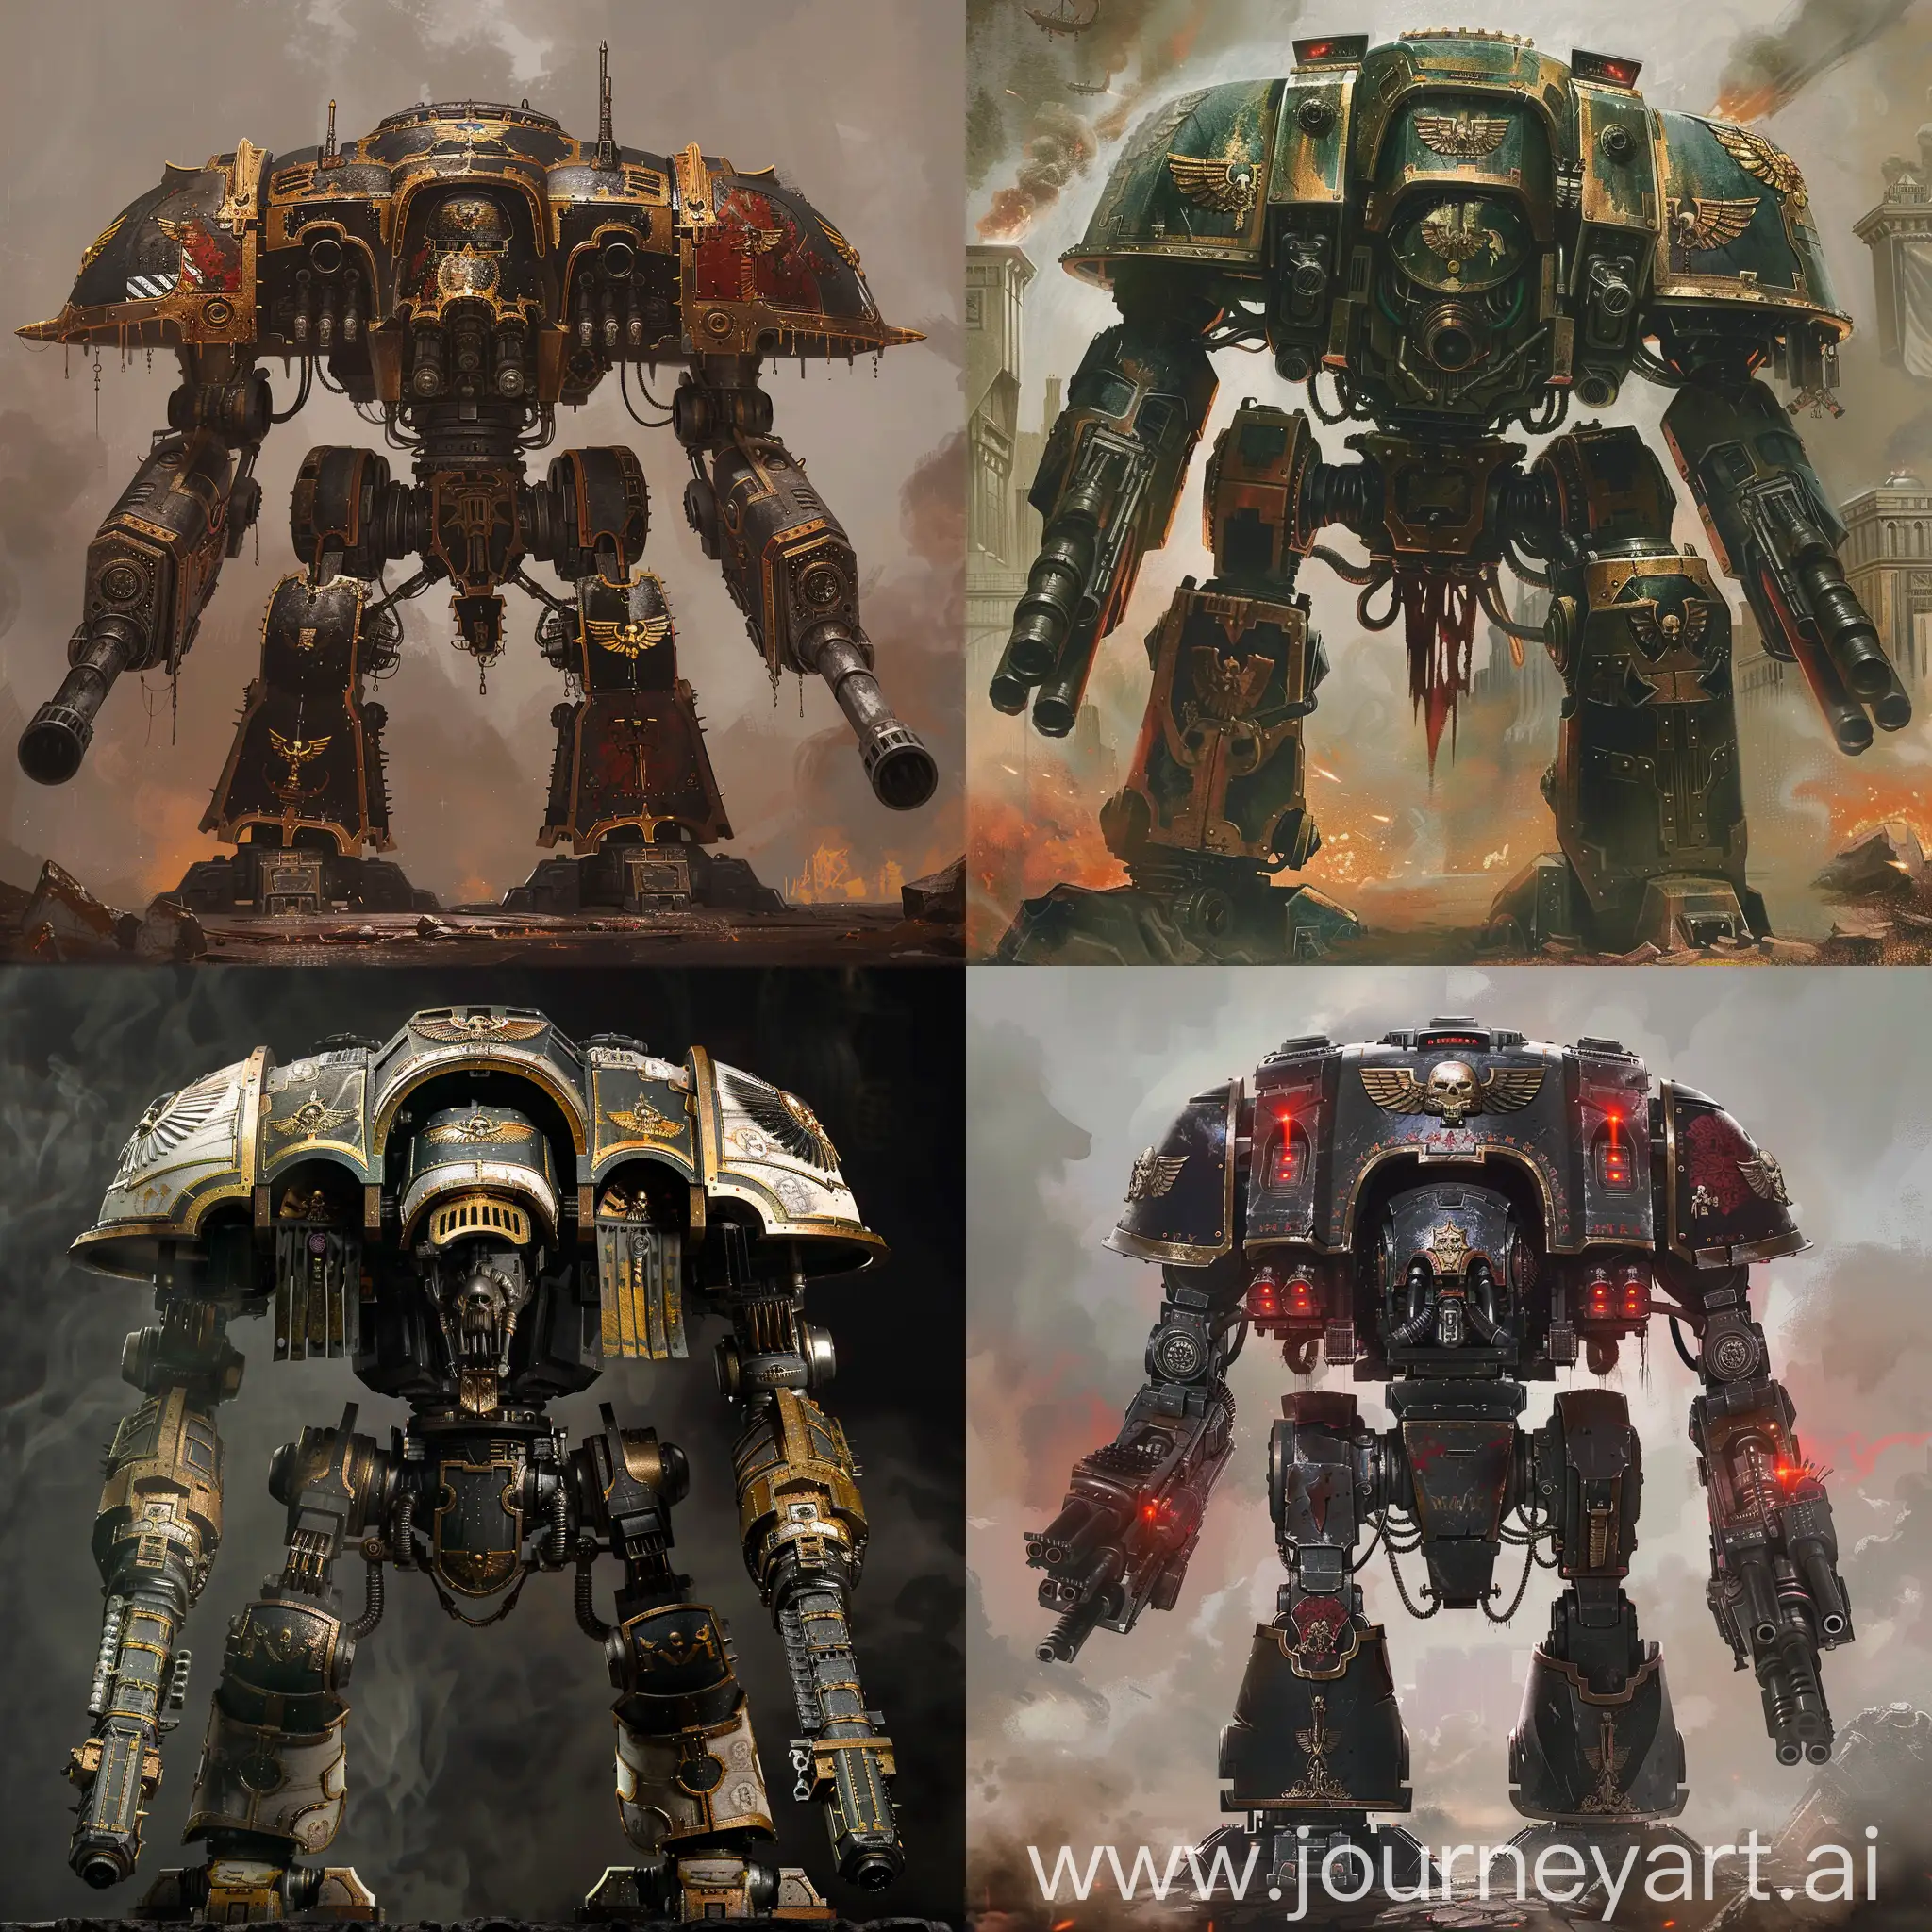 Majestic-Warhammer-40k-Emperorclass-Titan-Model-Version-6